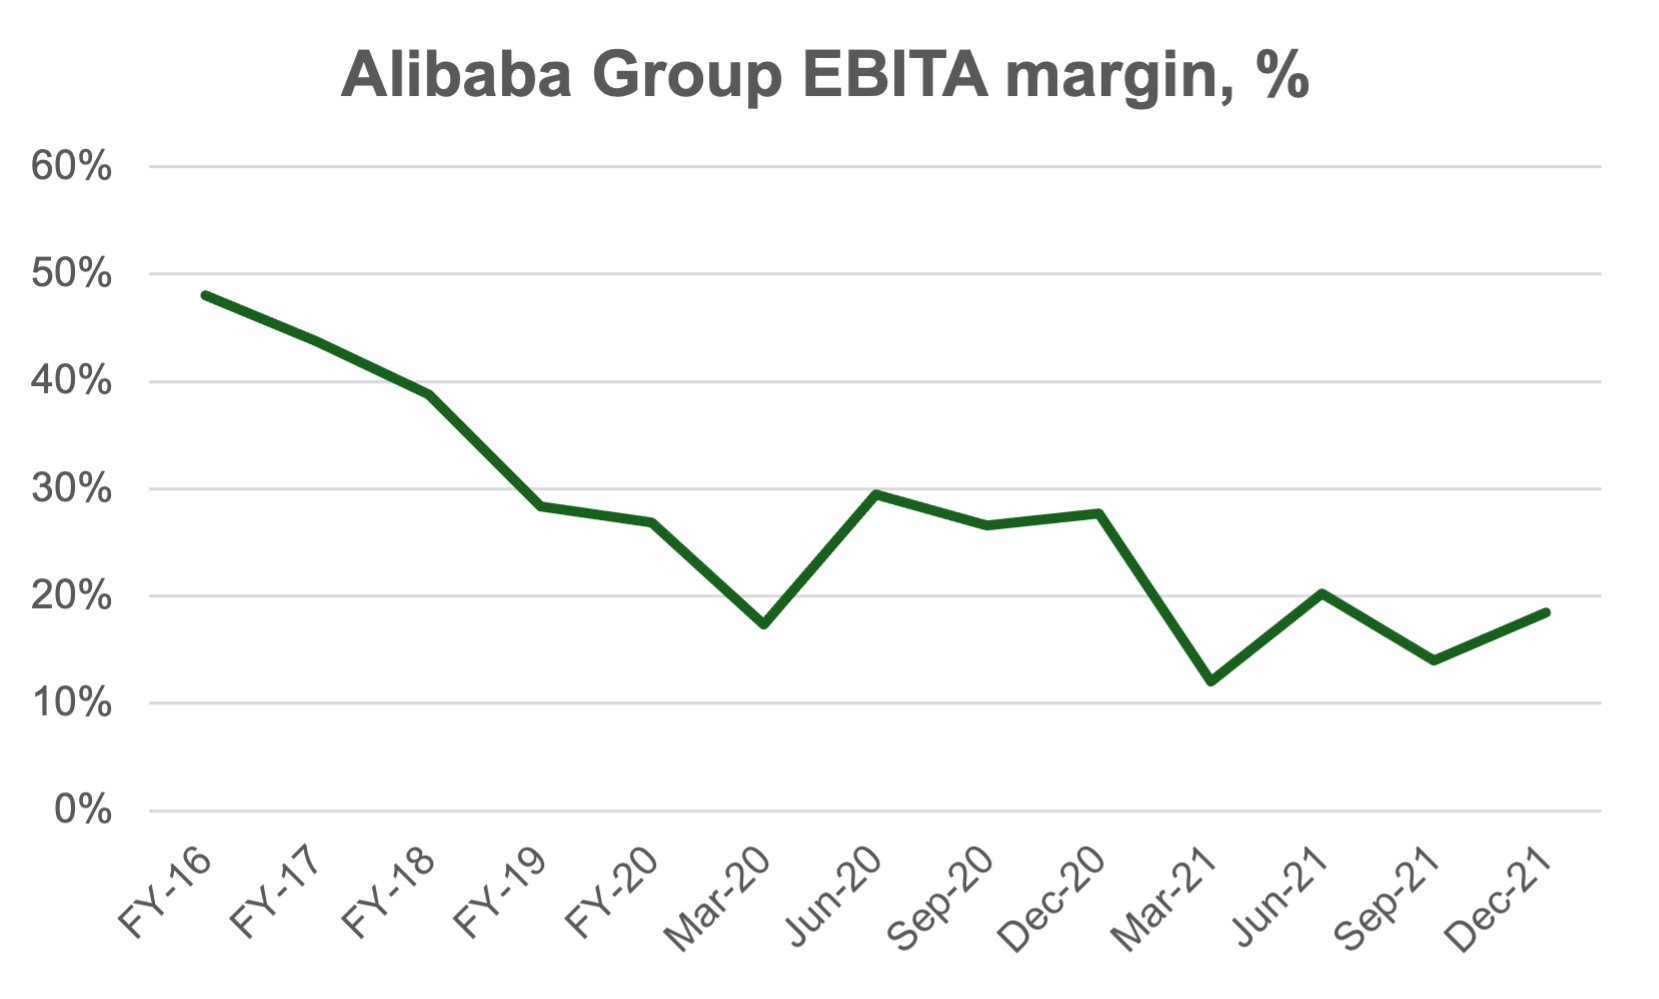 Alibaba Group EBITA margin over time